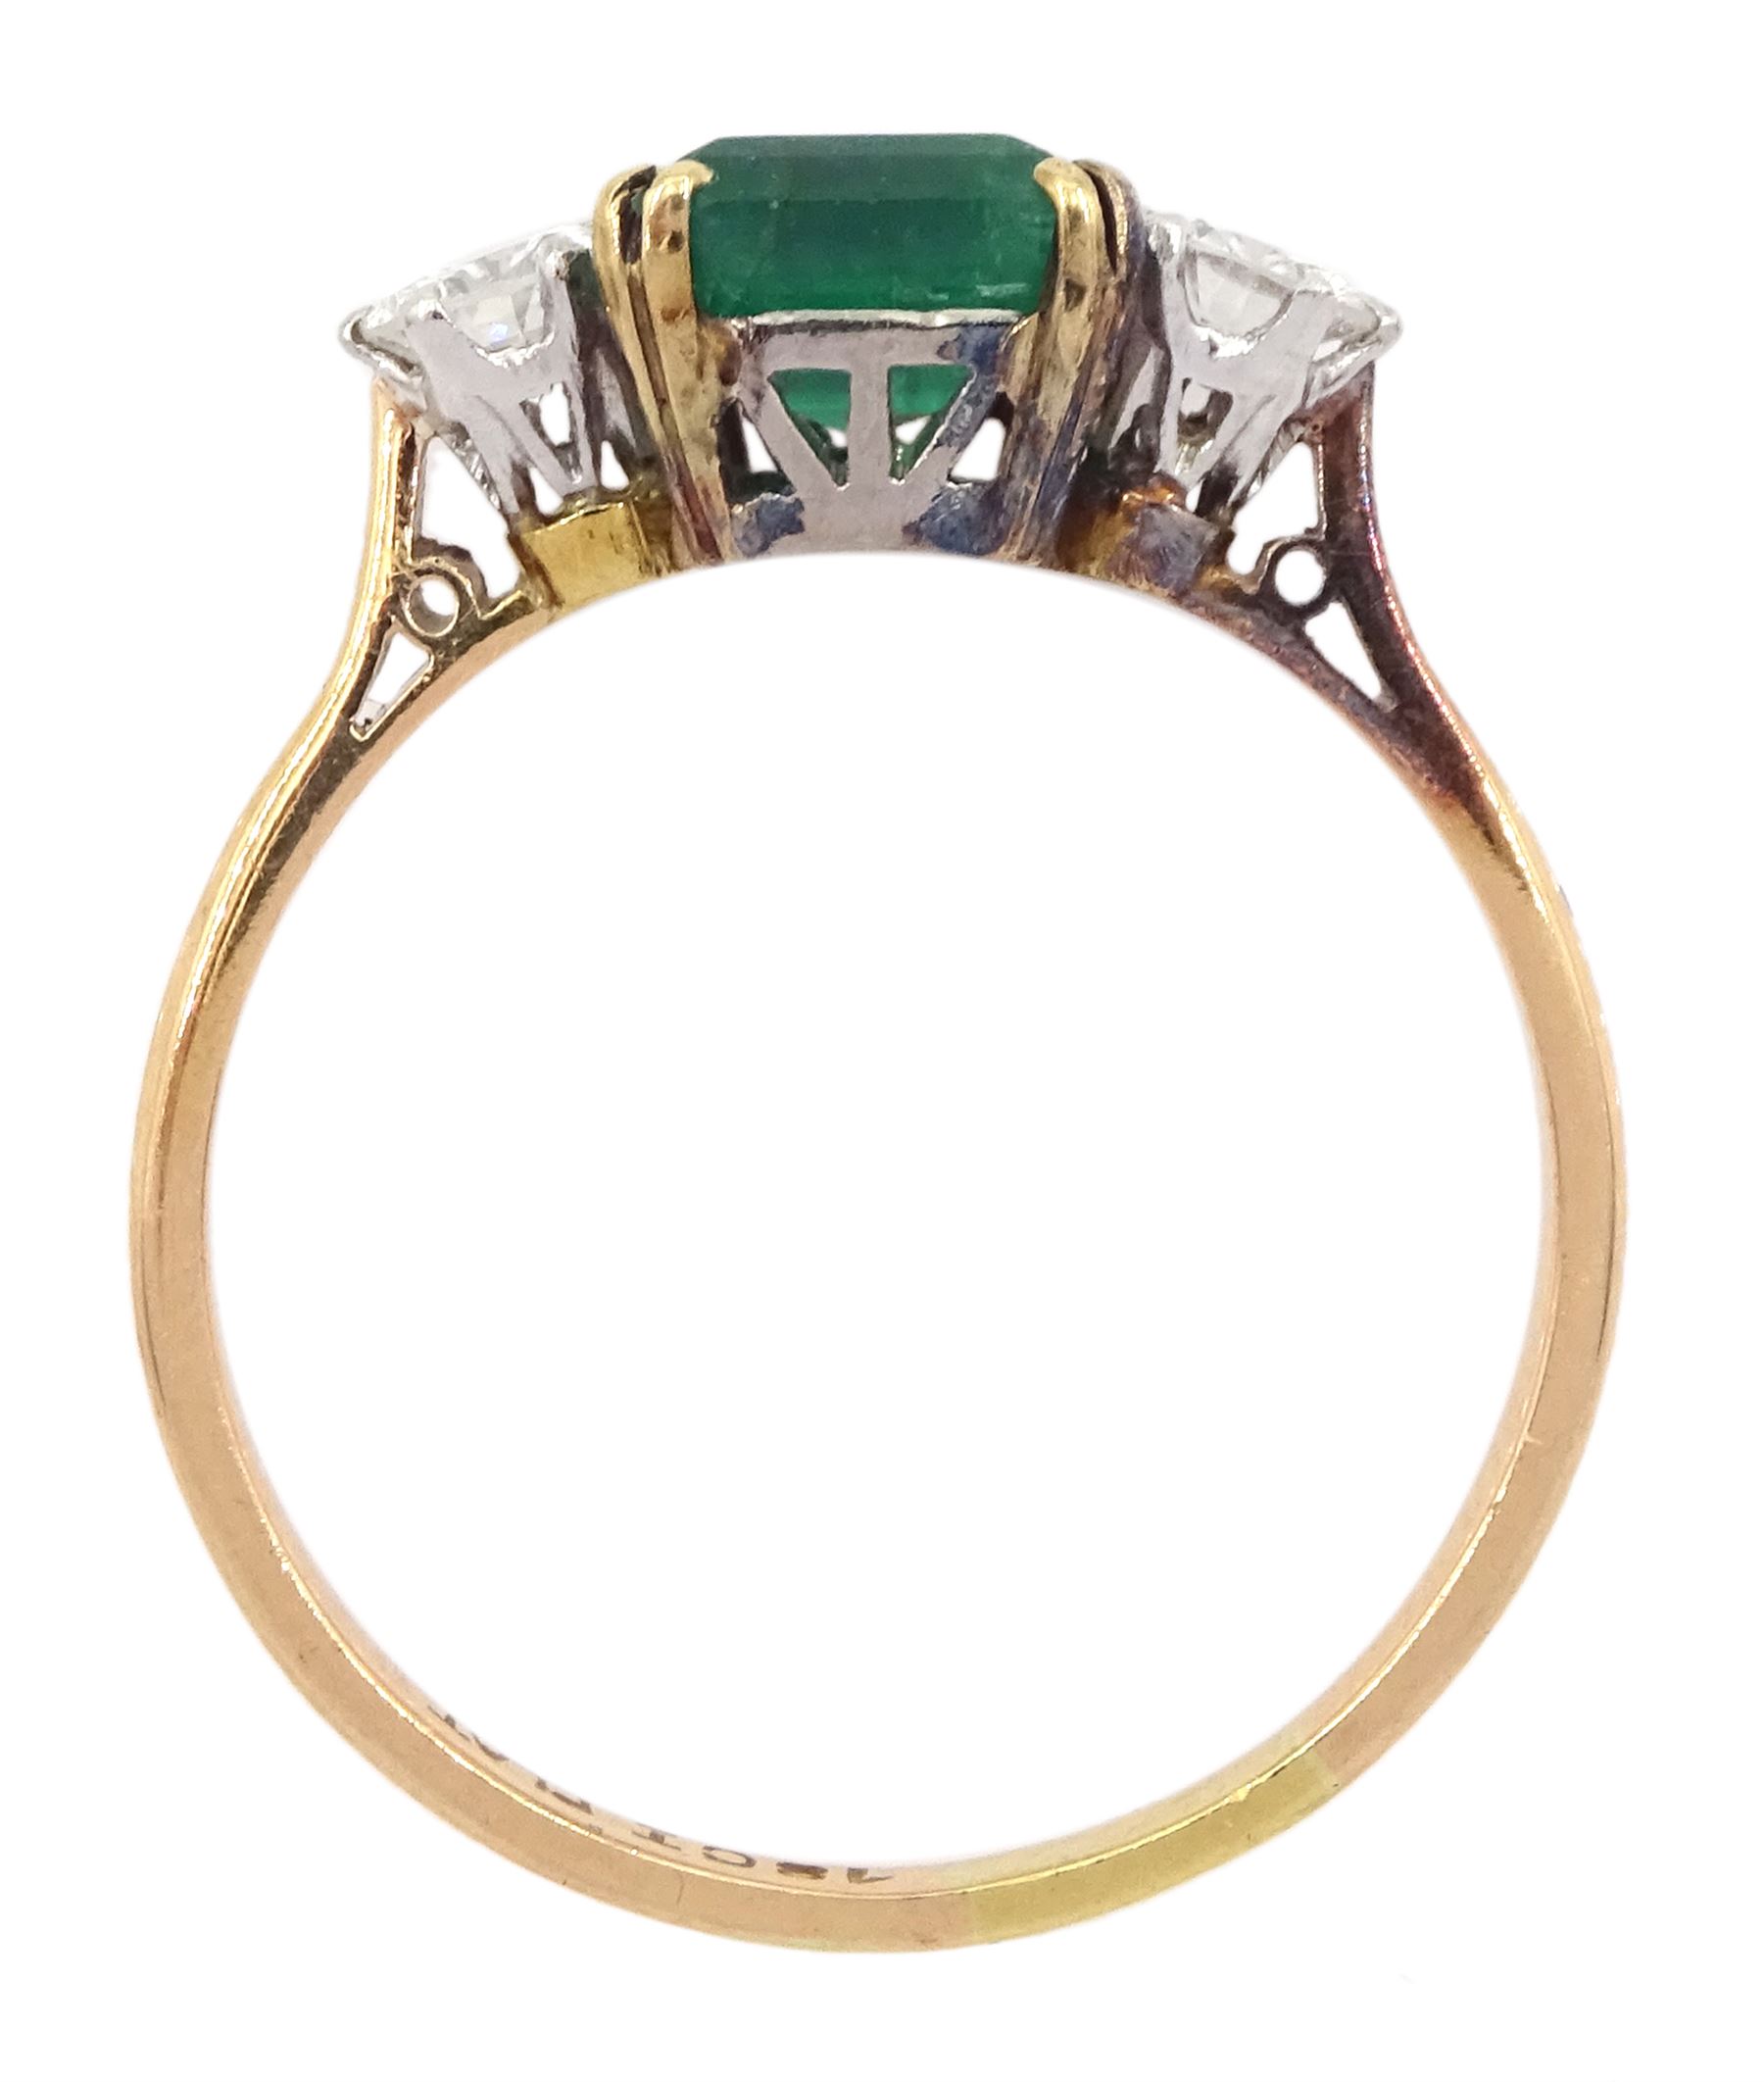 Gold three stone emerald and round brilliant cut diamond ring - Image 4 of 4